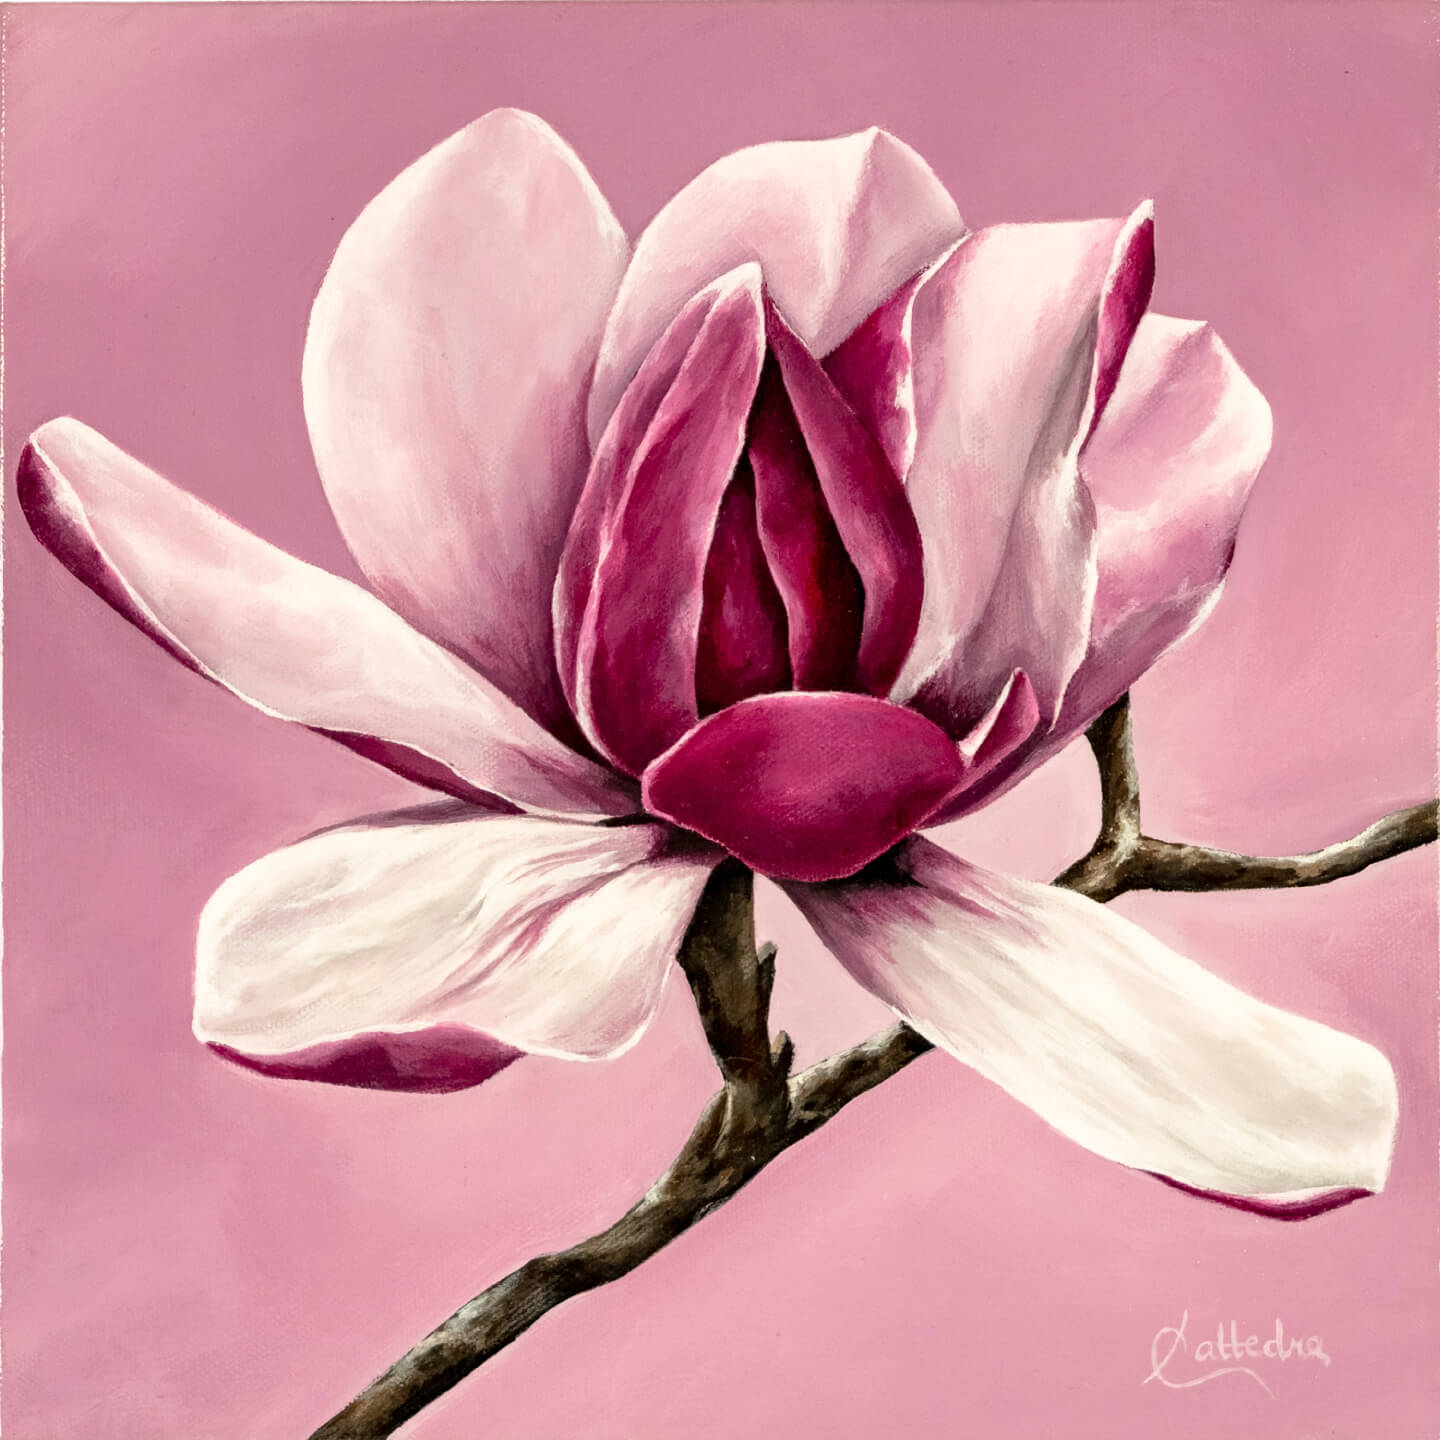 Spring Bloom (Magnolia)